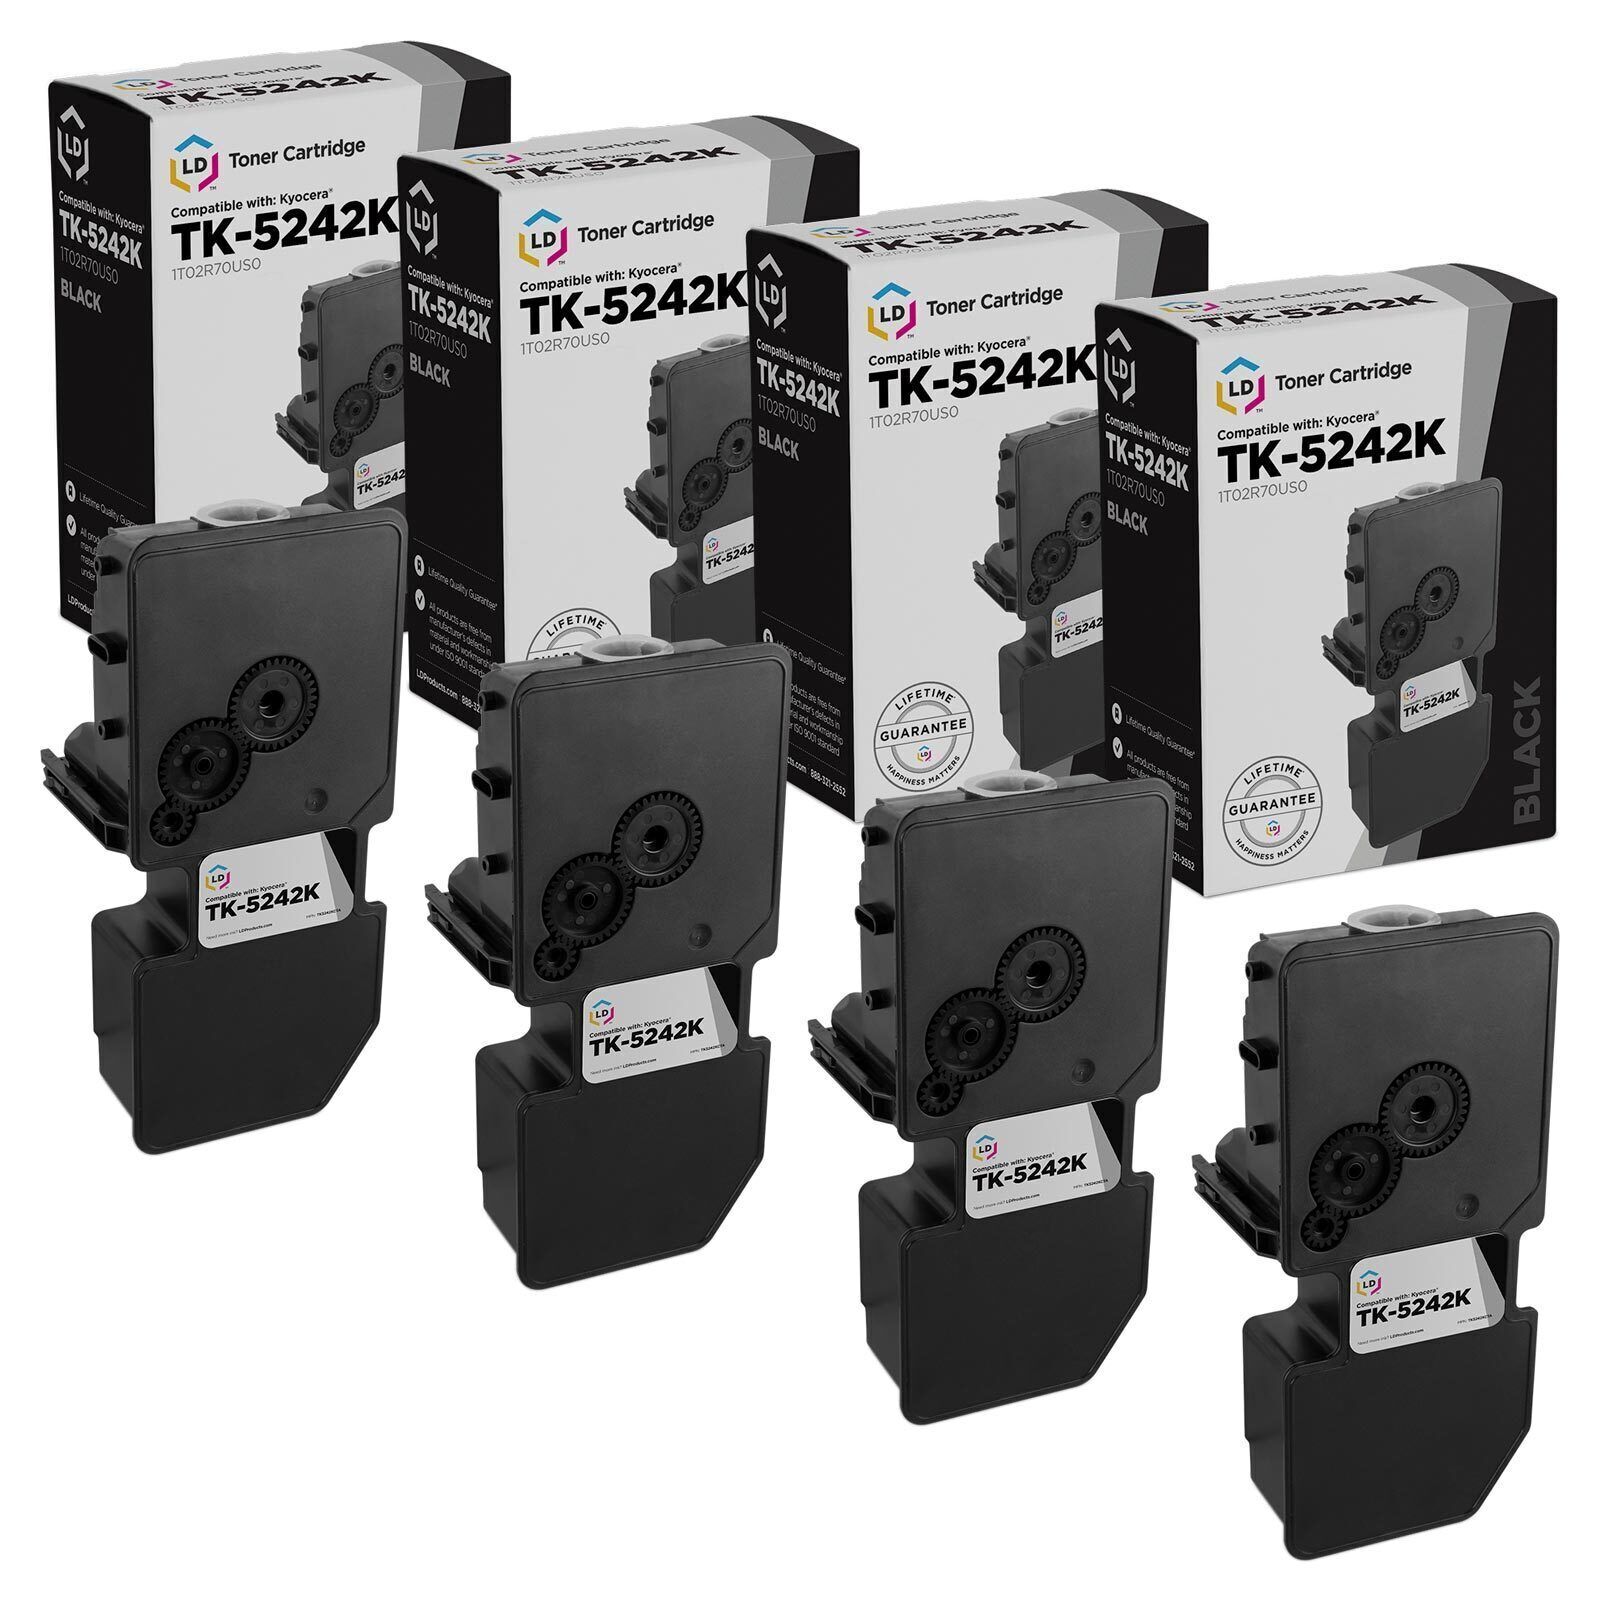 LD Compatible Kyocera TK-5242K Black Toner 4-Pack for ECOSYS M5526cdw, P5026cdw